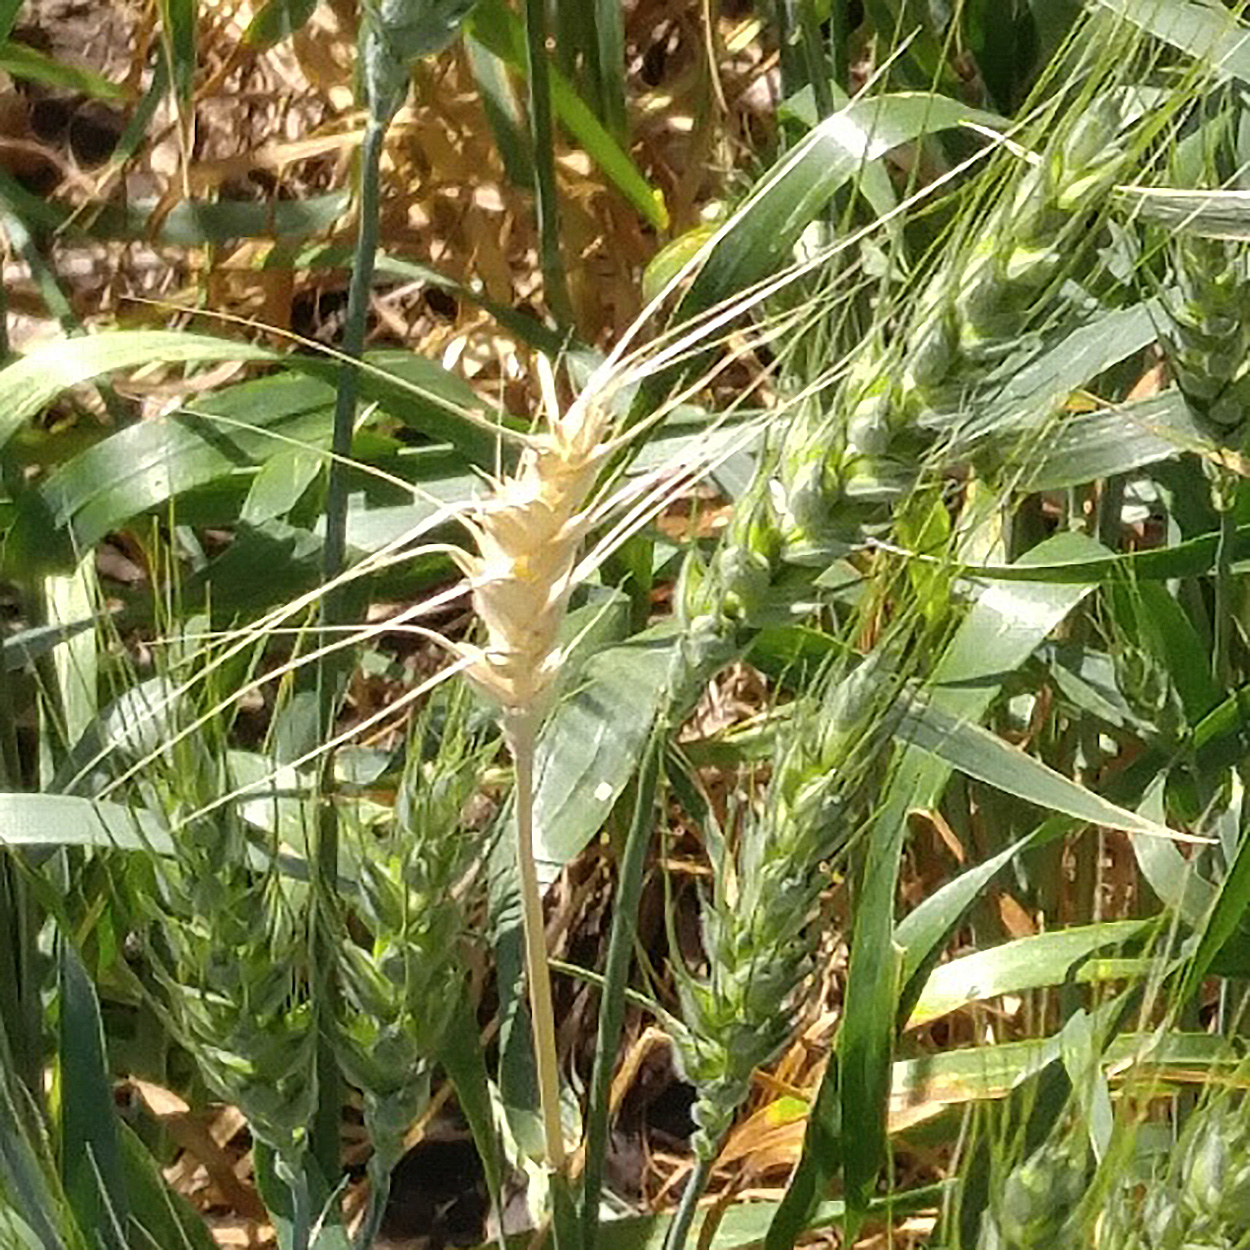 Wheat Stem Maggots Observed in South Dakota Wheat